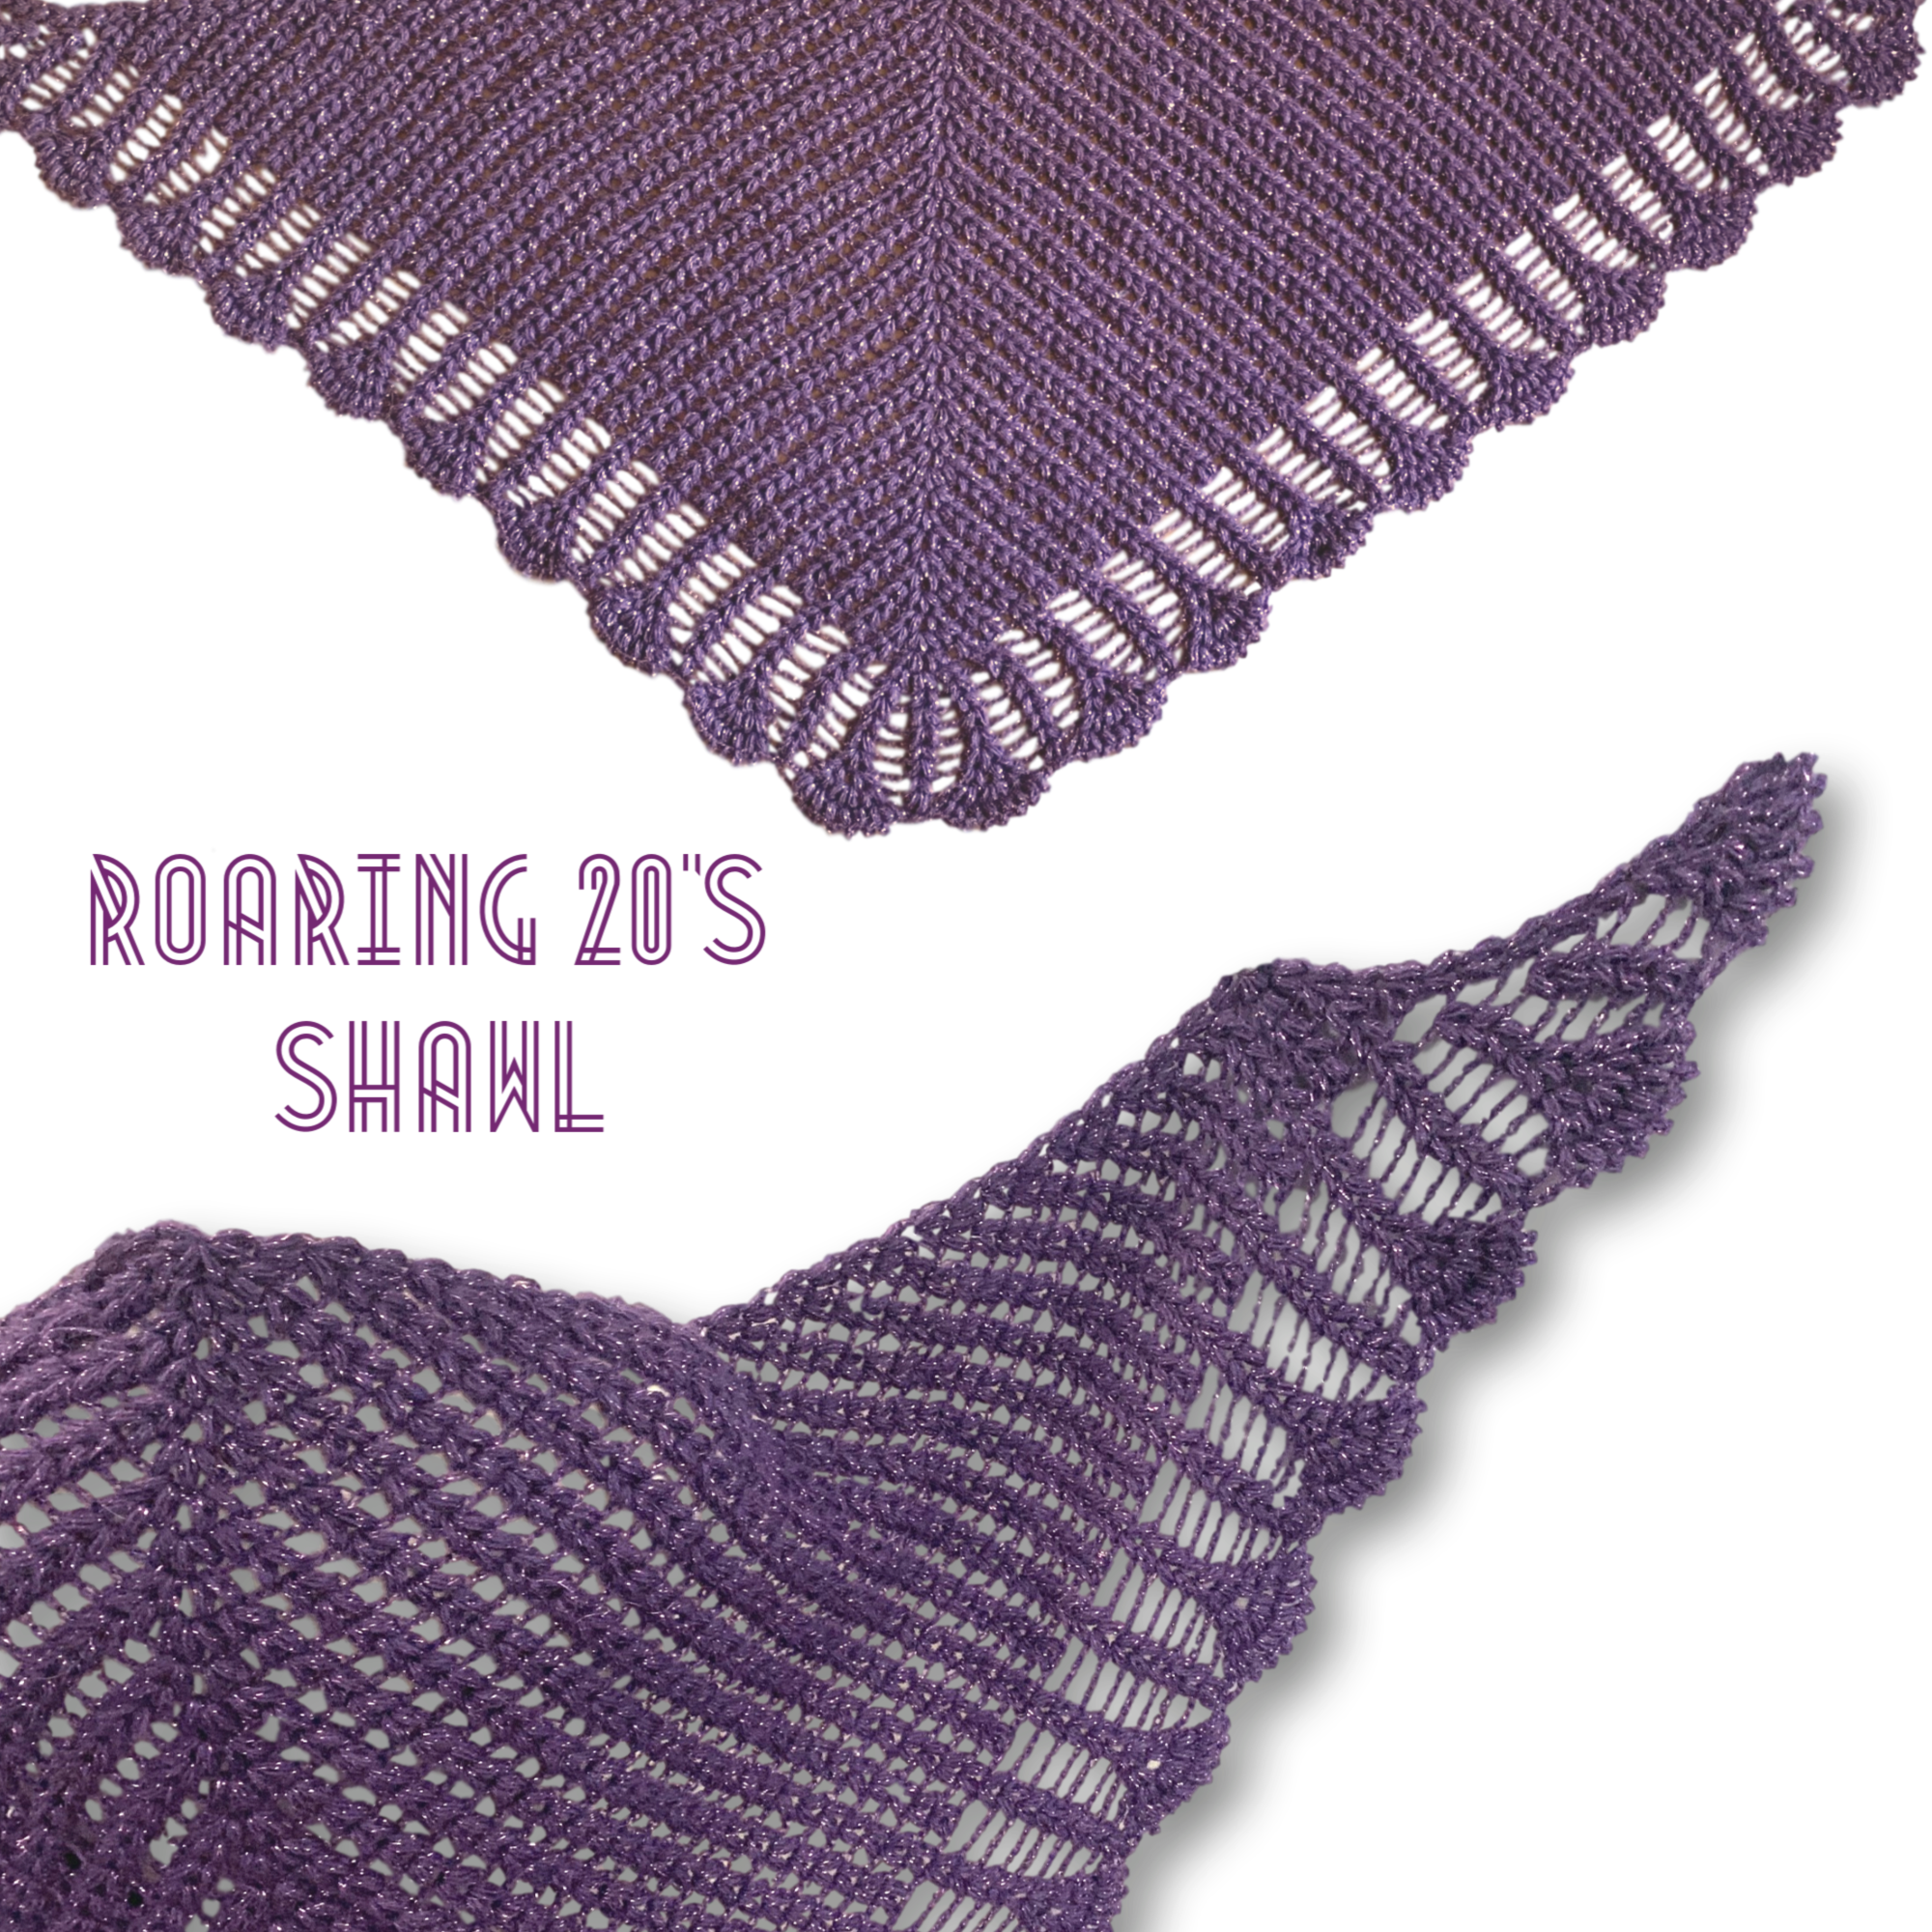 Roaring 20s Shawl - Bonita Patterns